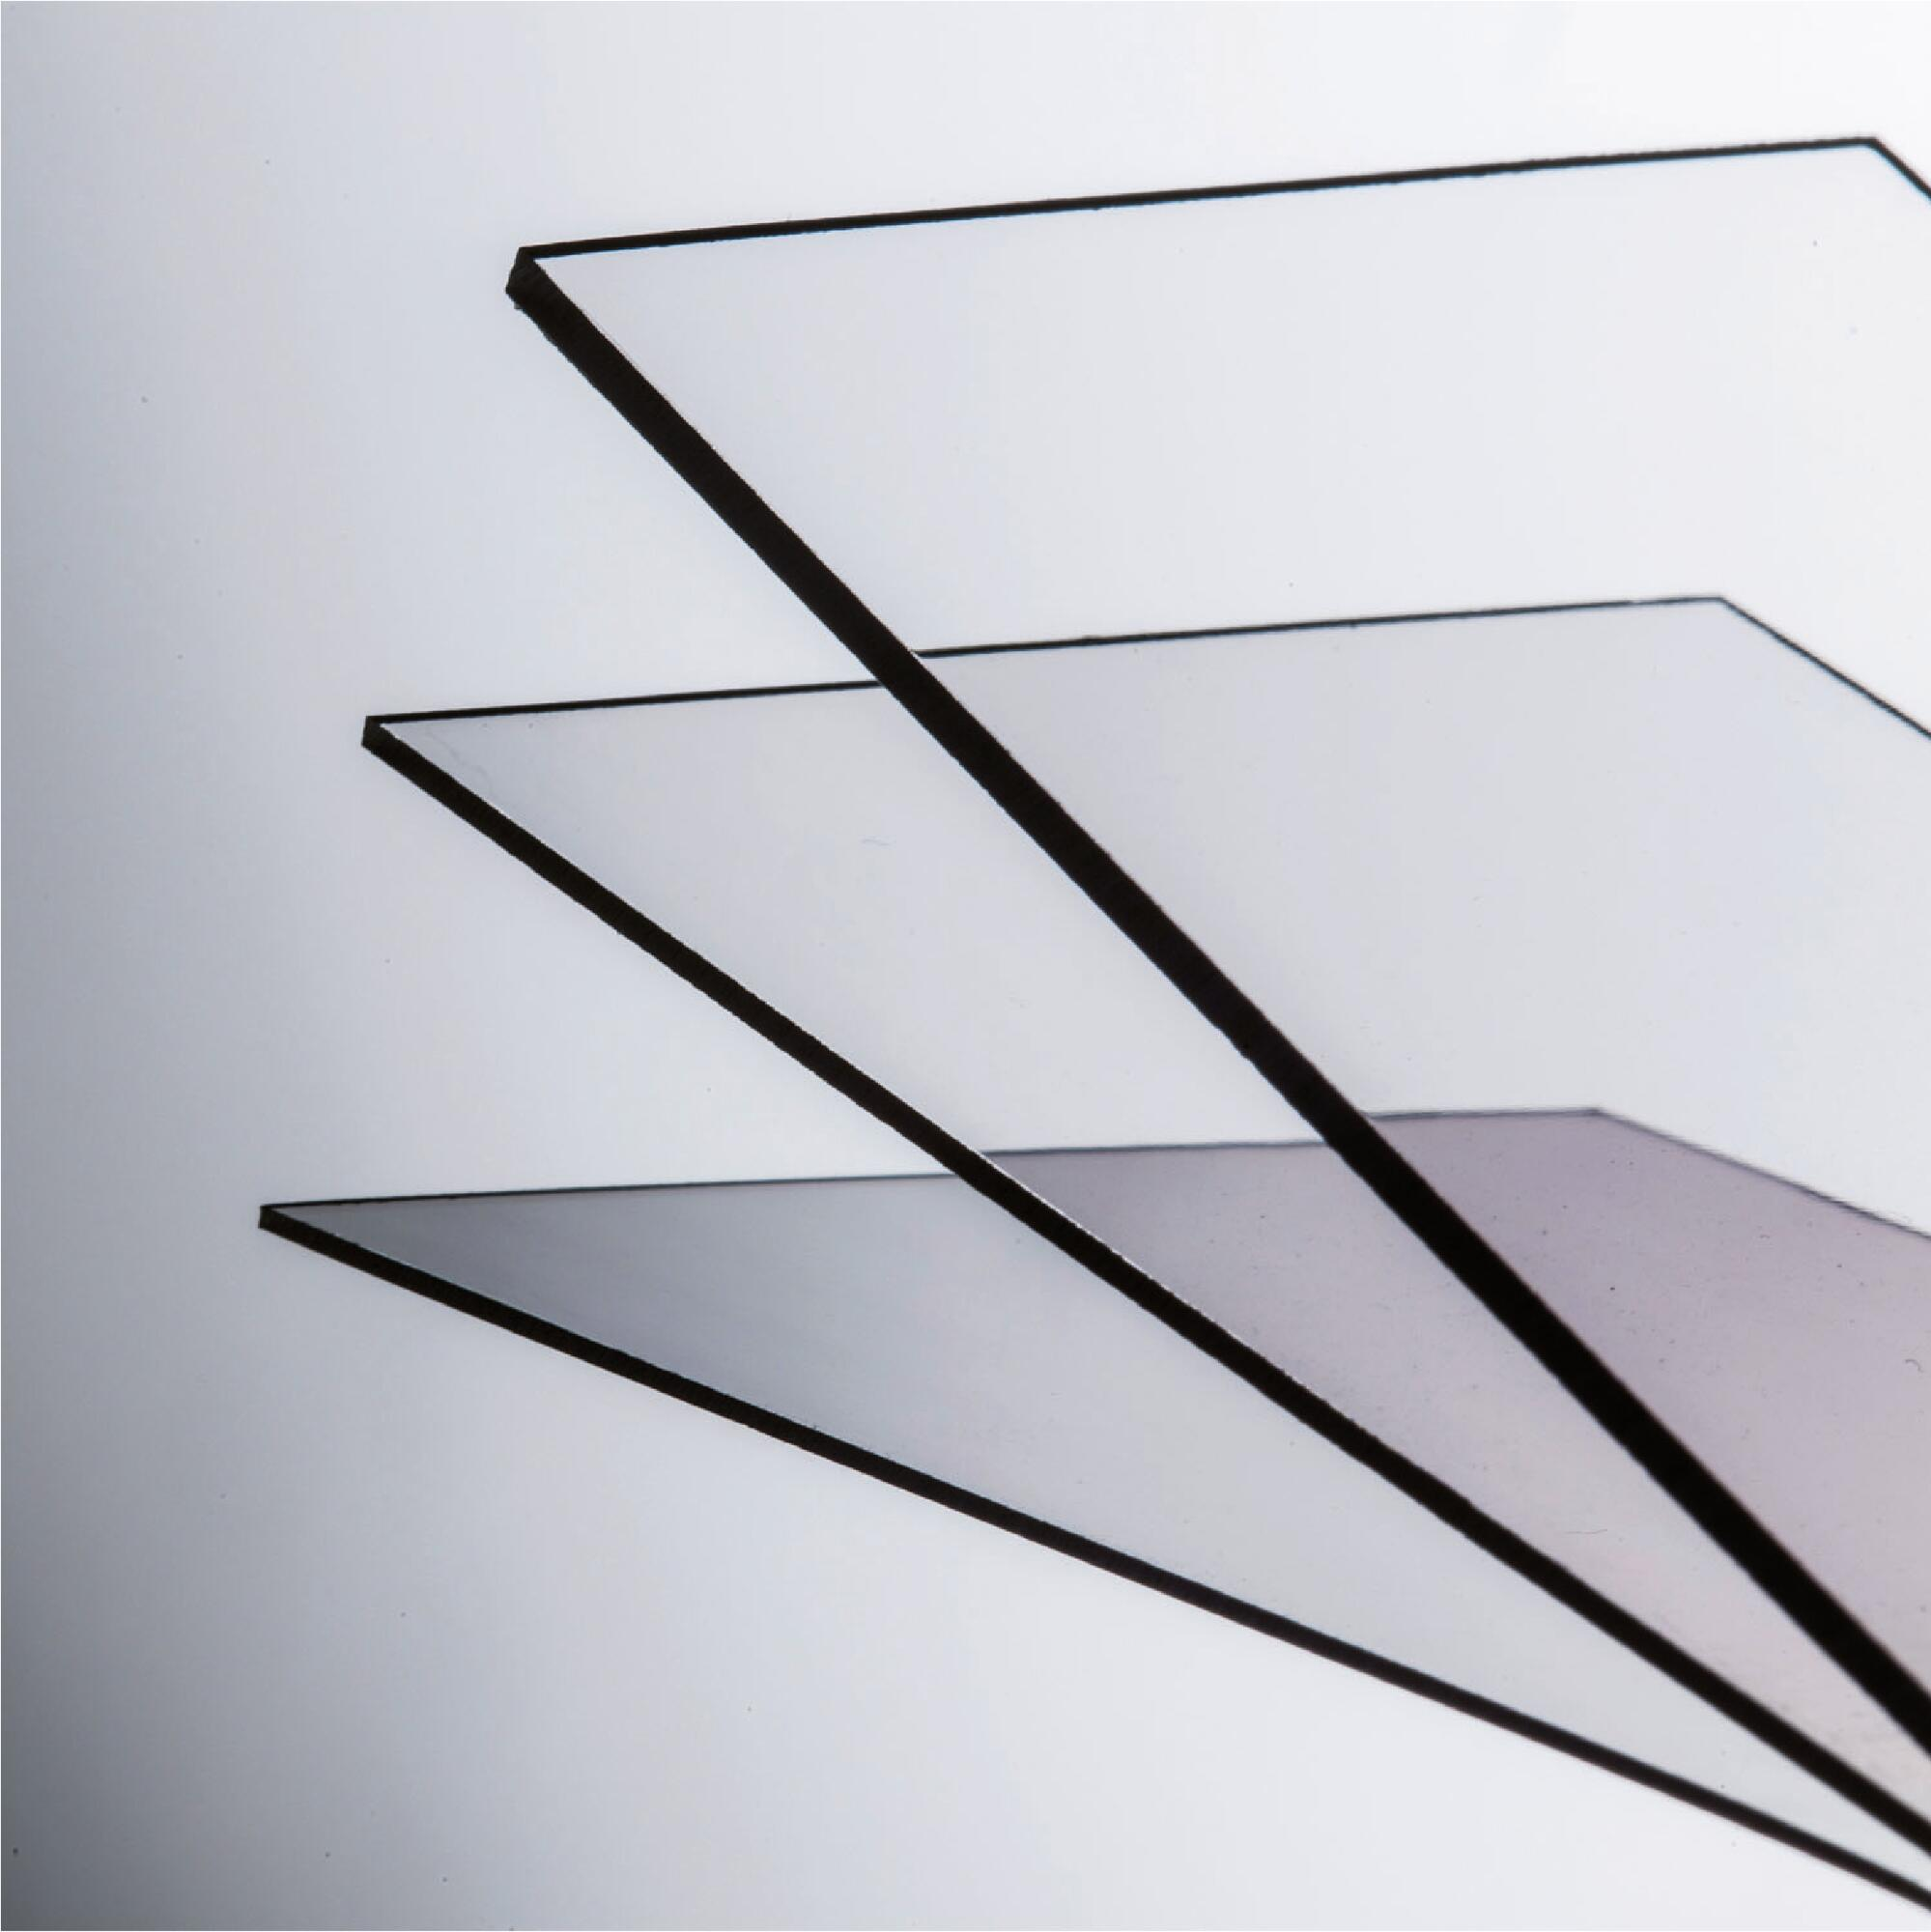 Lastra plexiglass trasparente, pannelli plexiglass su misura